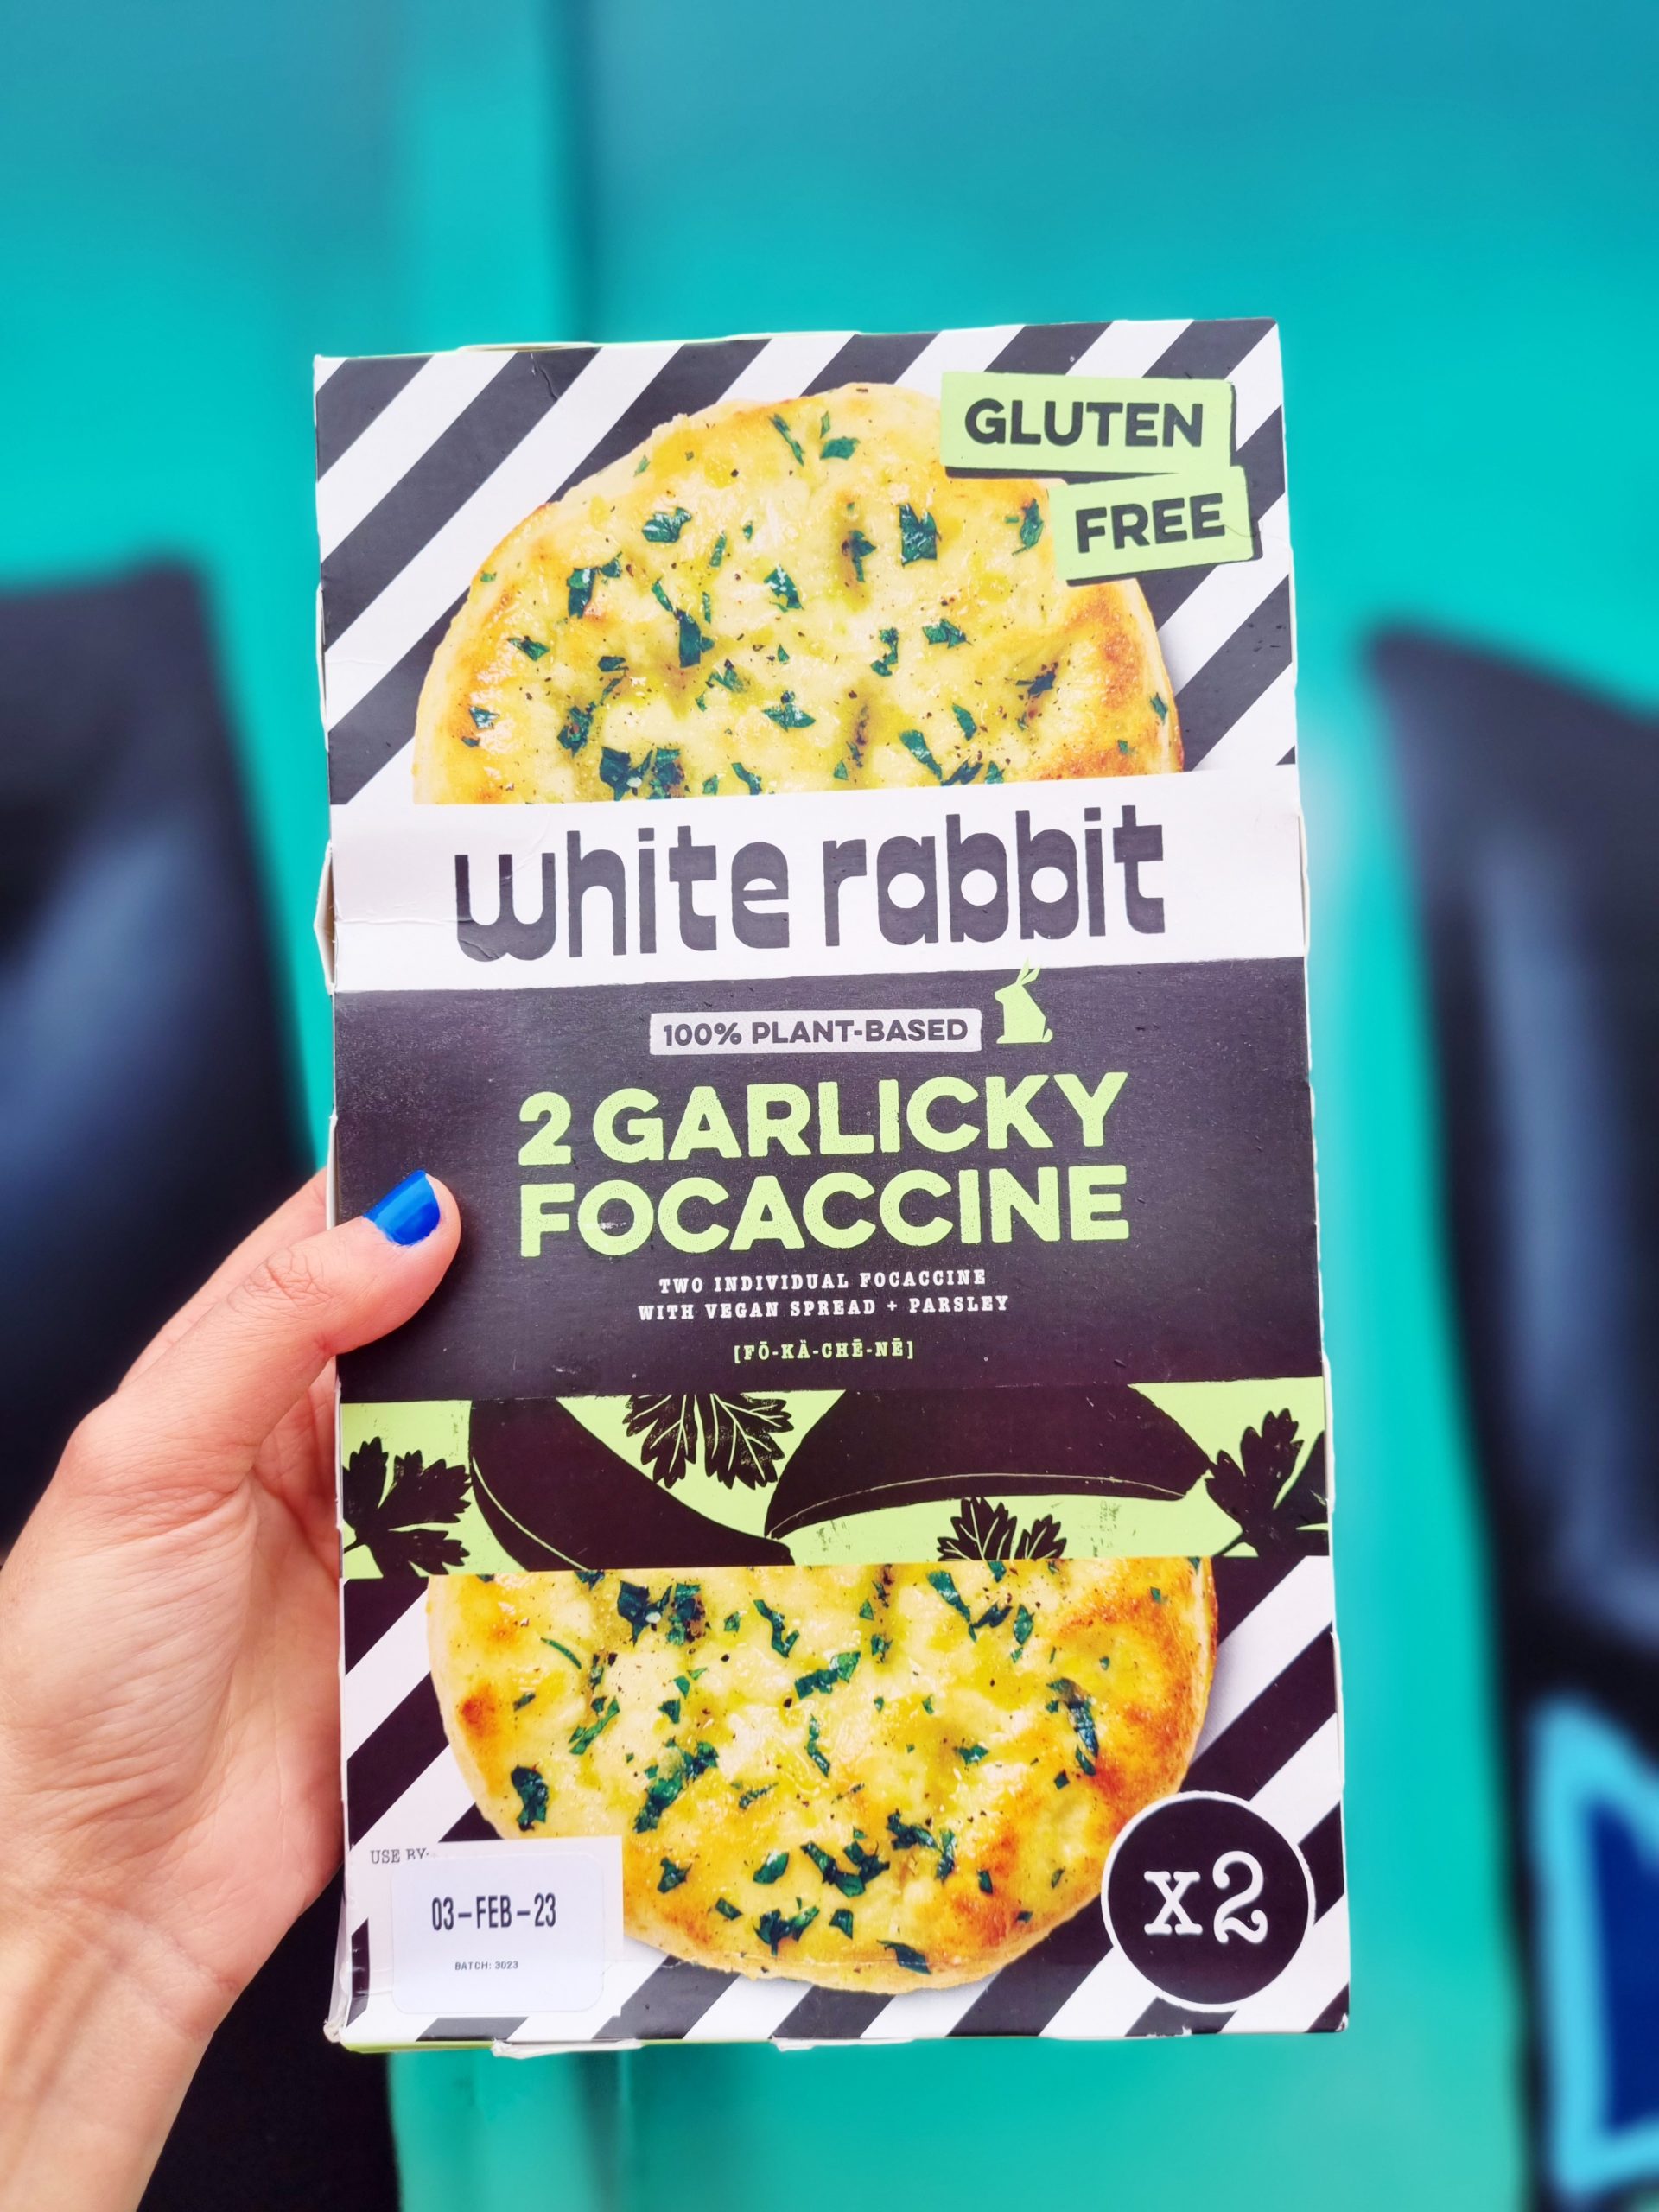 <img src="vegan.jpg" alt="vegan white rabbit garlic foccaine"/> 